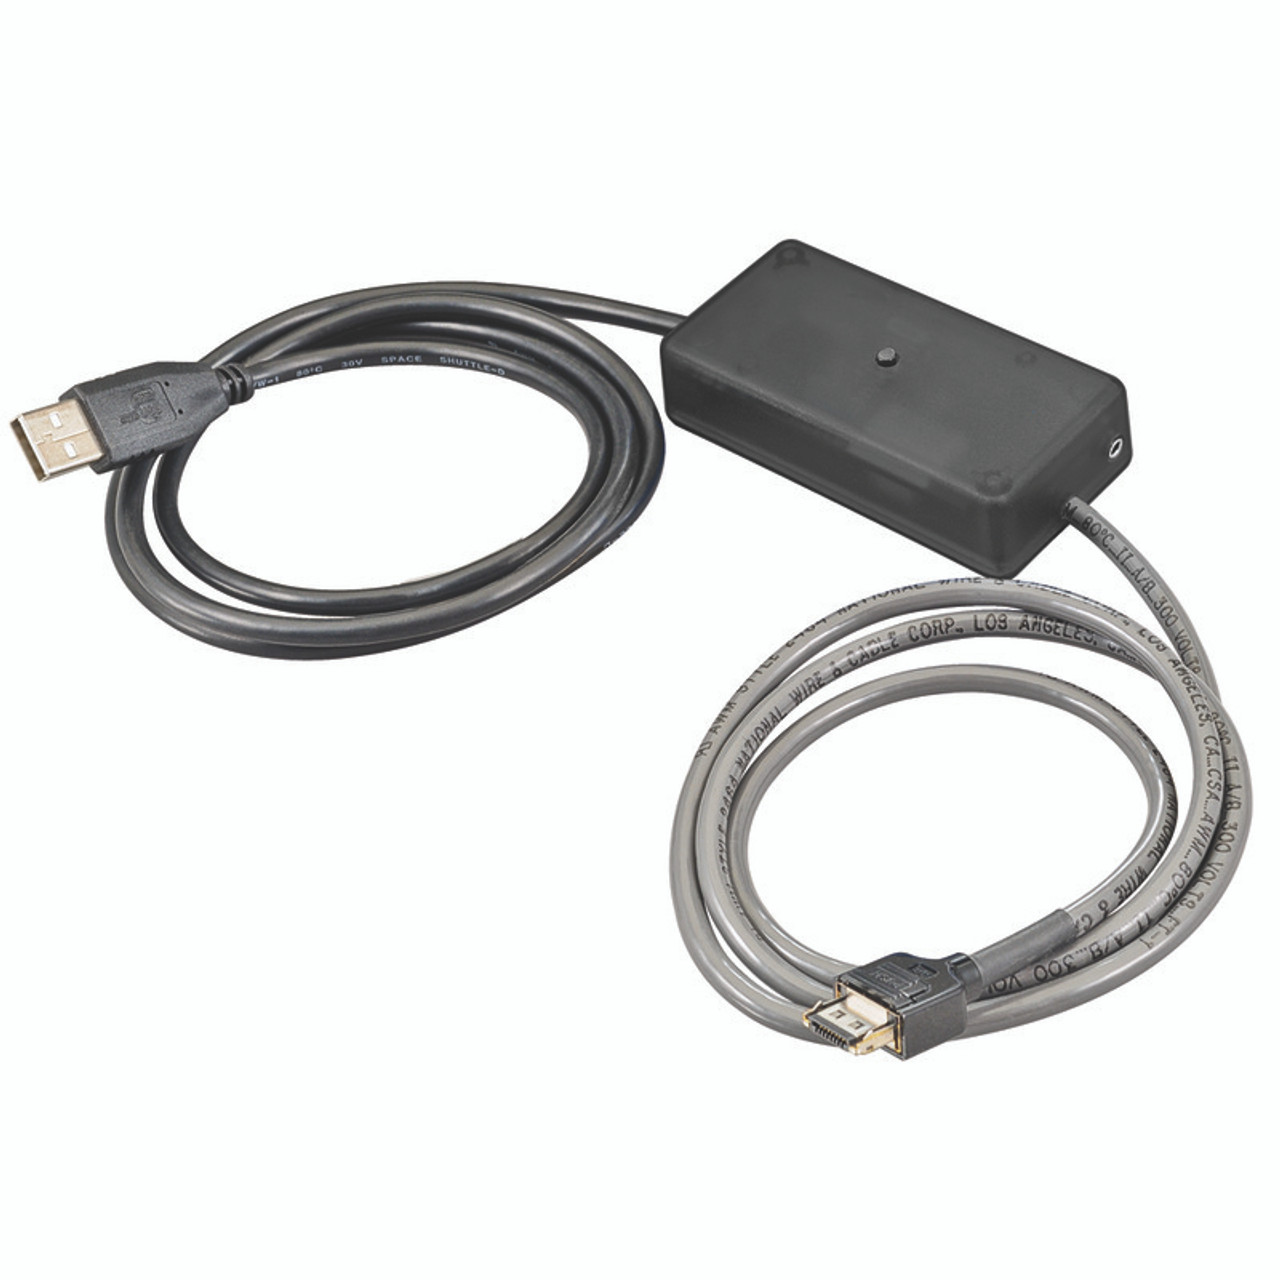 Starrett SMARTCABLE USB KEYBOARD - 2700 INDICATOR FOR BASIC, PLUS, and REMOTES|TestEquipmentUSA